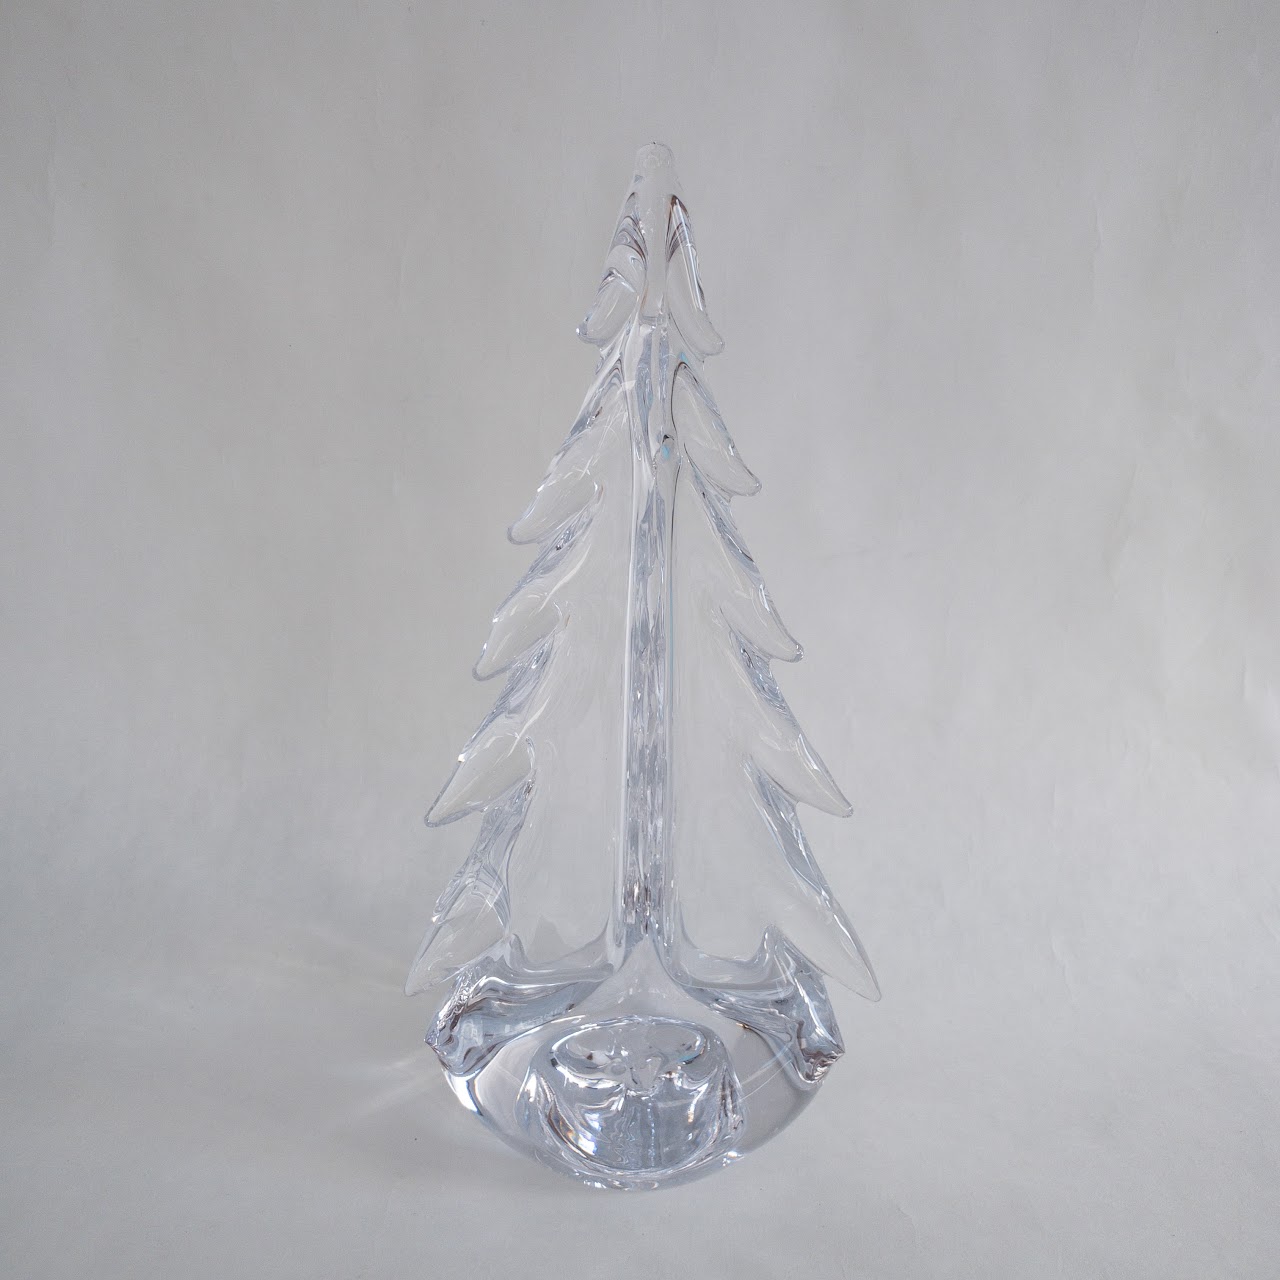 Simon Pierce Crystal Christmas Tree